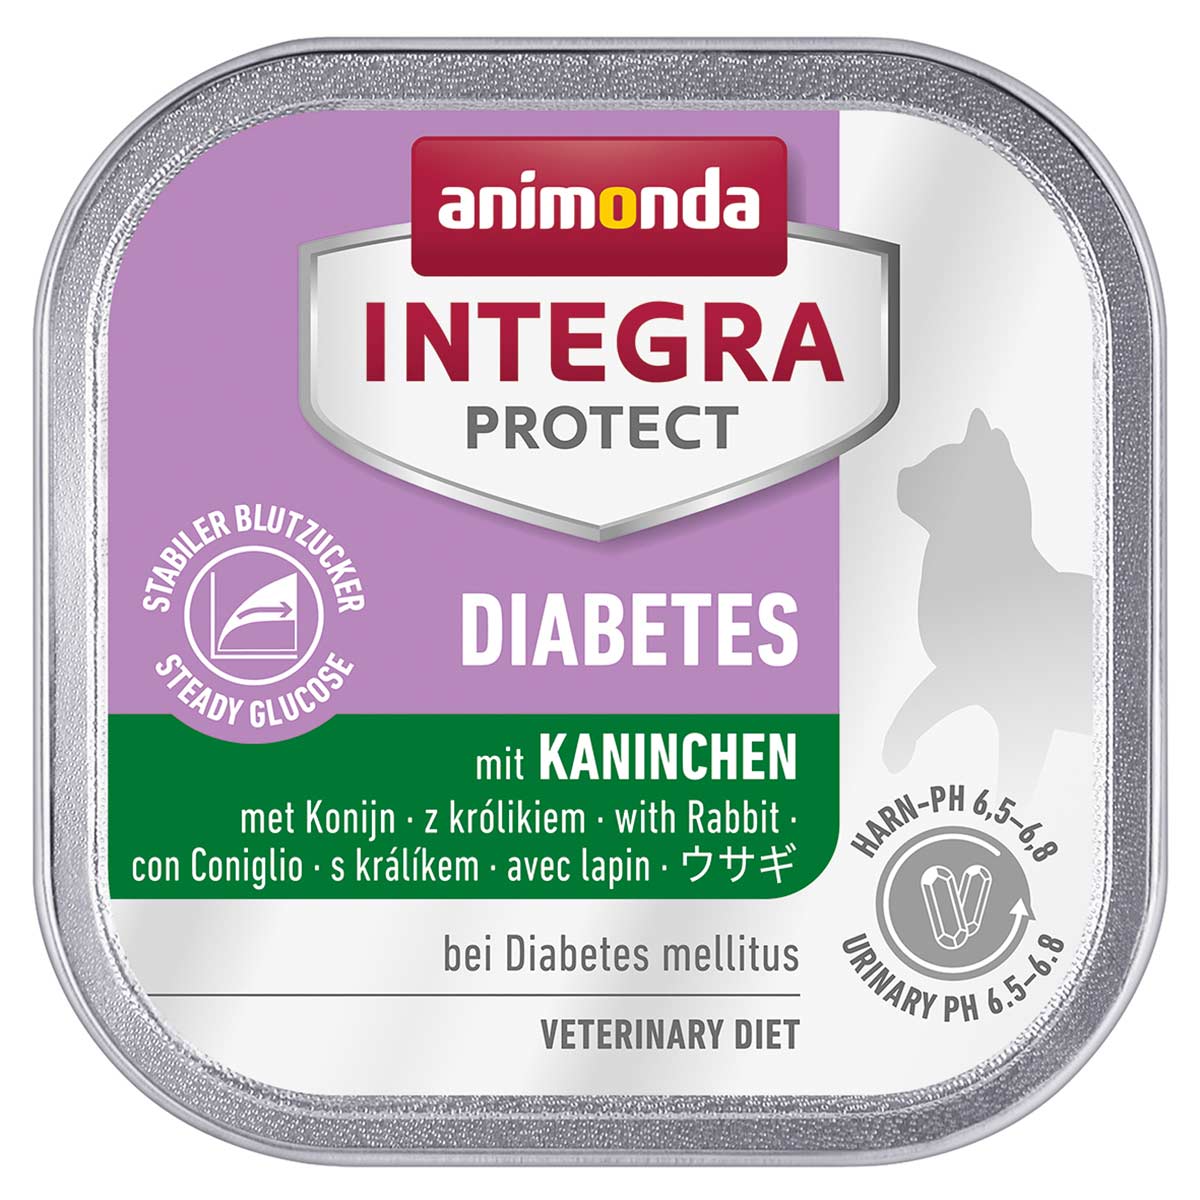 animonda IINTEGRA PROTECT Diabetes mit Kaninchen 16x100g von animonda Integra Protect